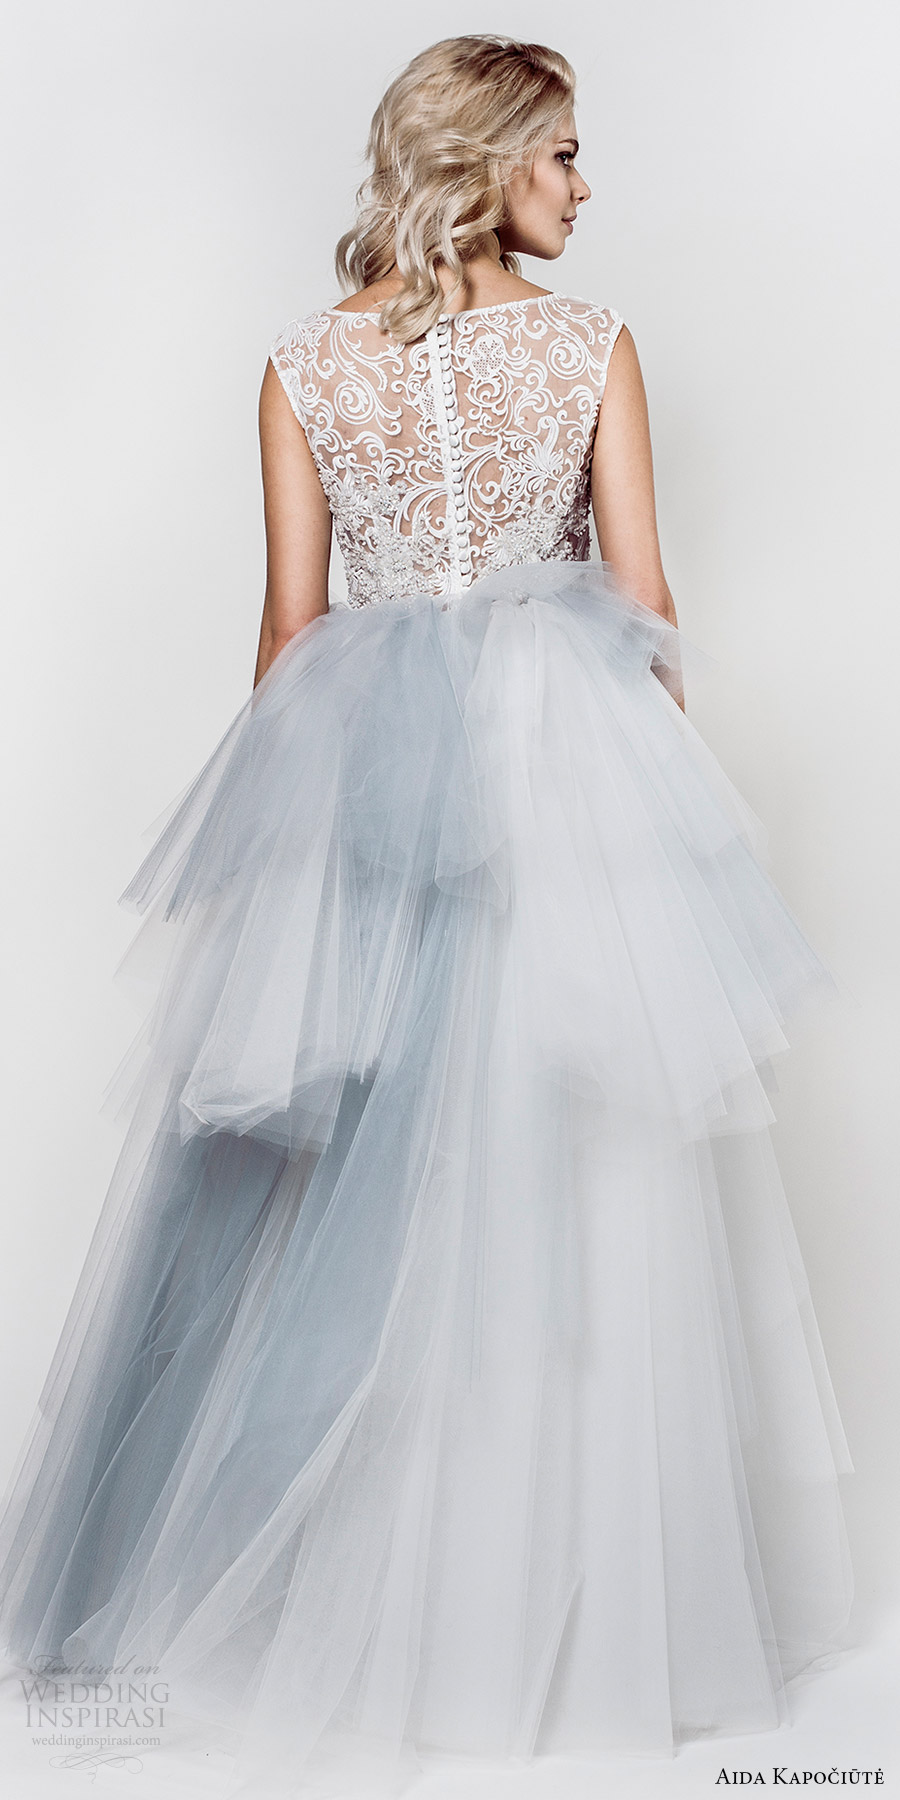 aida kapociute 2017 bridal sleeveless jewel neck lace bodice ball gown wedding dress (9) bv light blue color